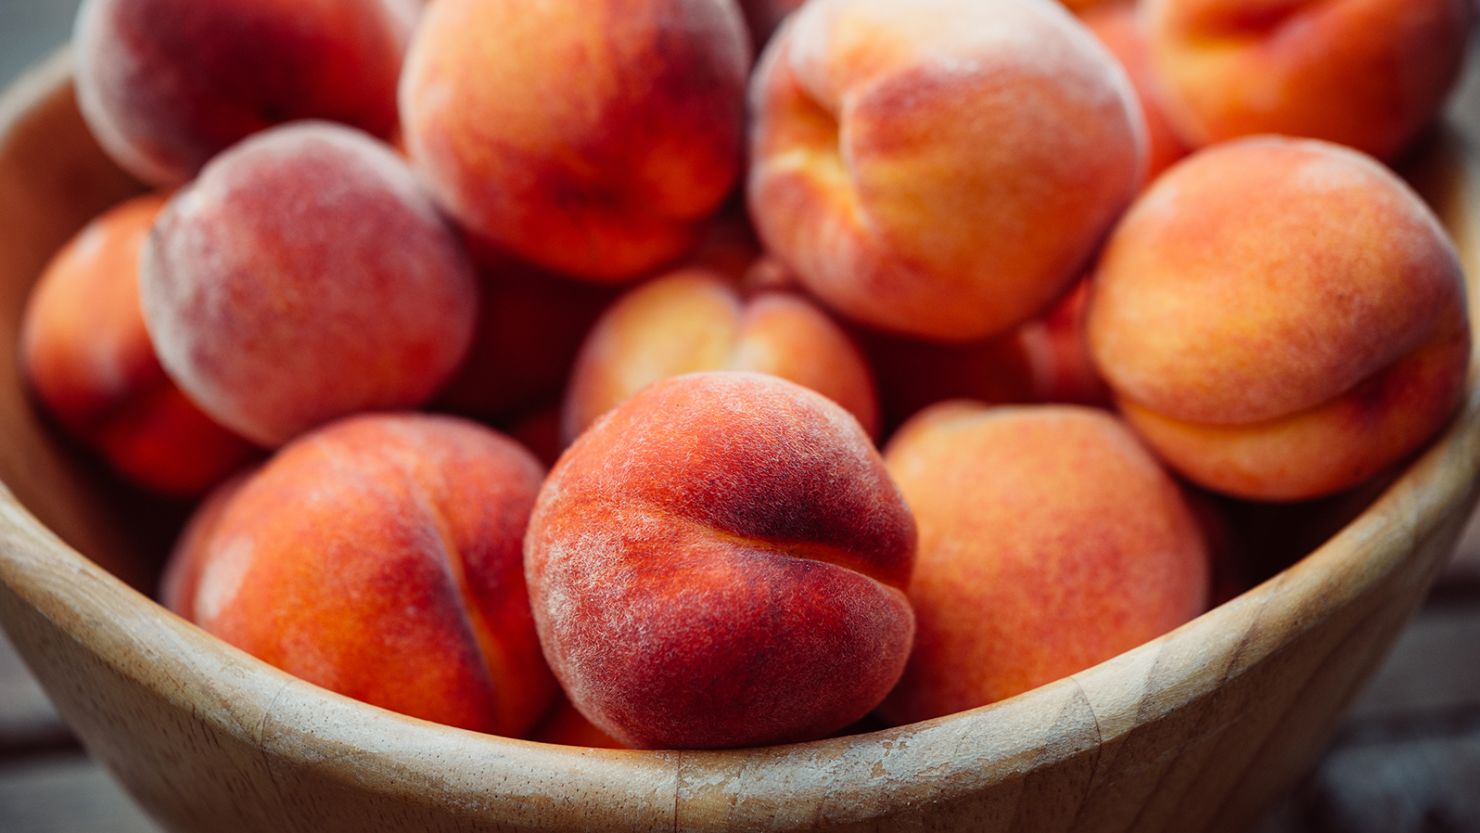 Utah Peaches Prove Hard to Beat as Tasty Summer Treat